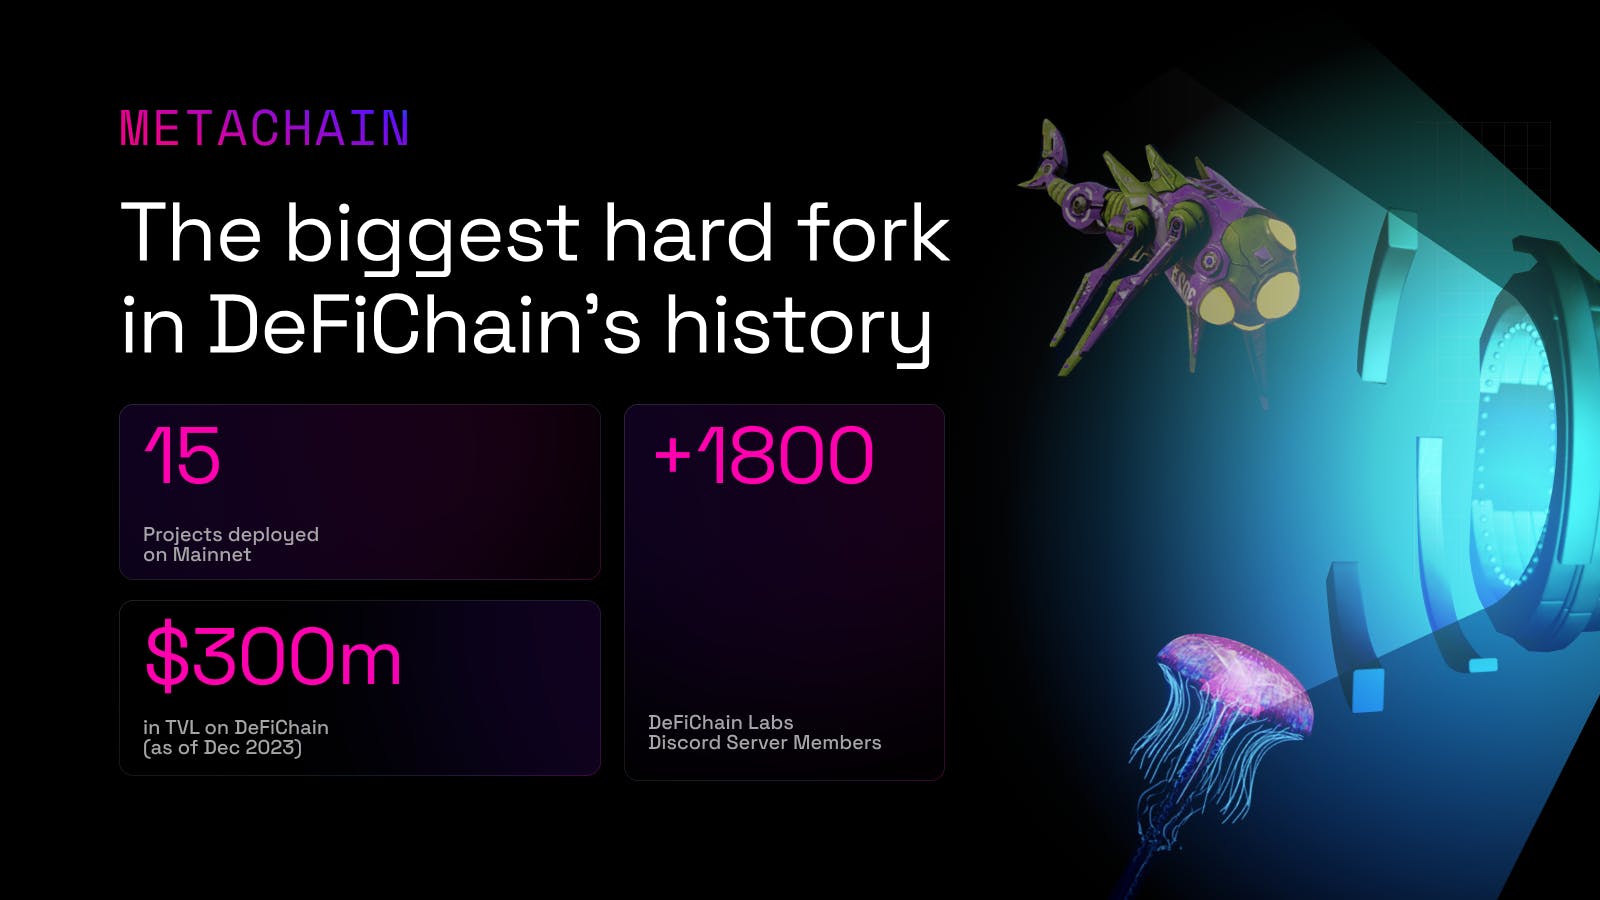 MetaChain - The biggest hard fork in DeFiChain's history